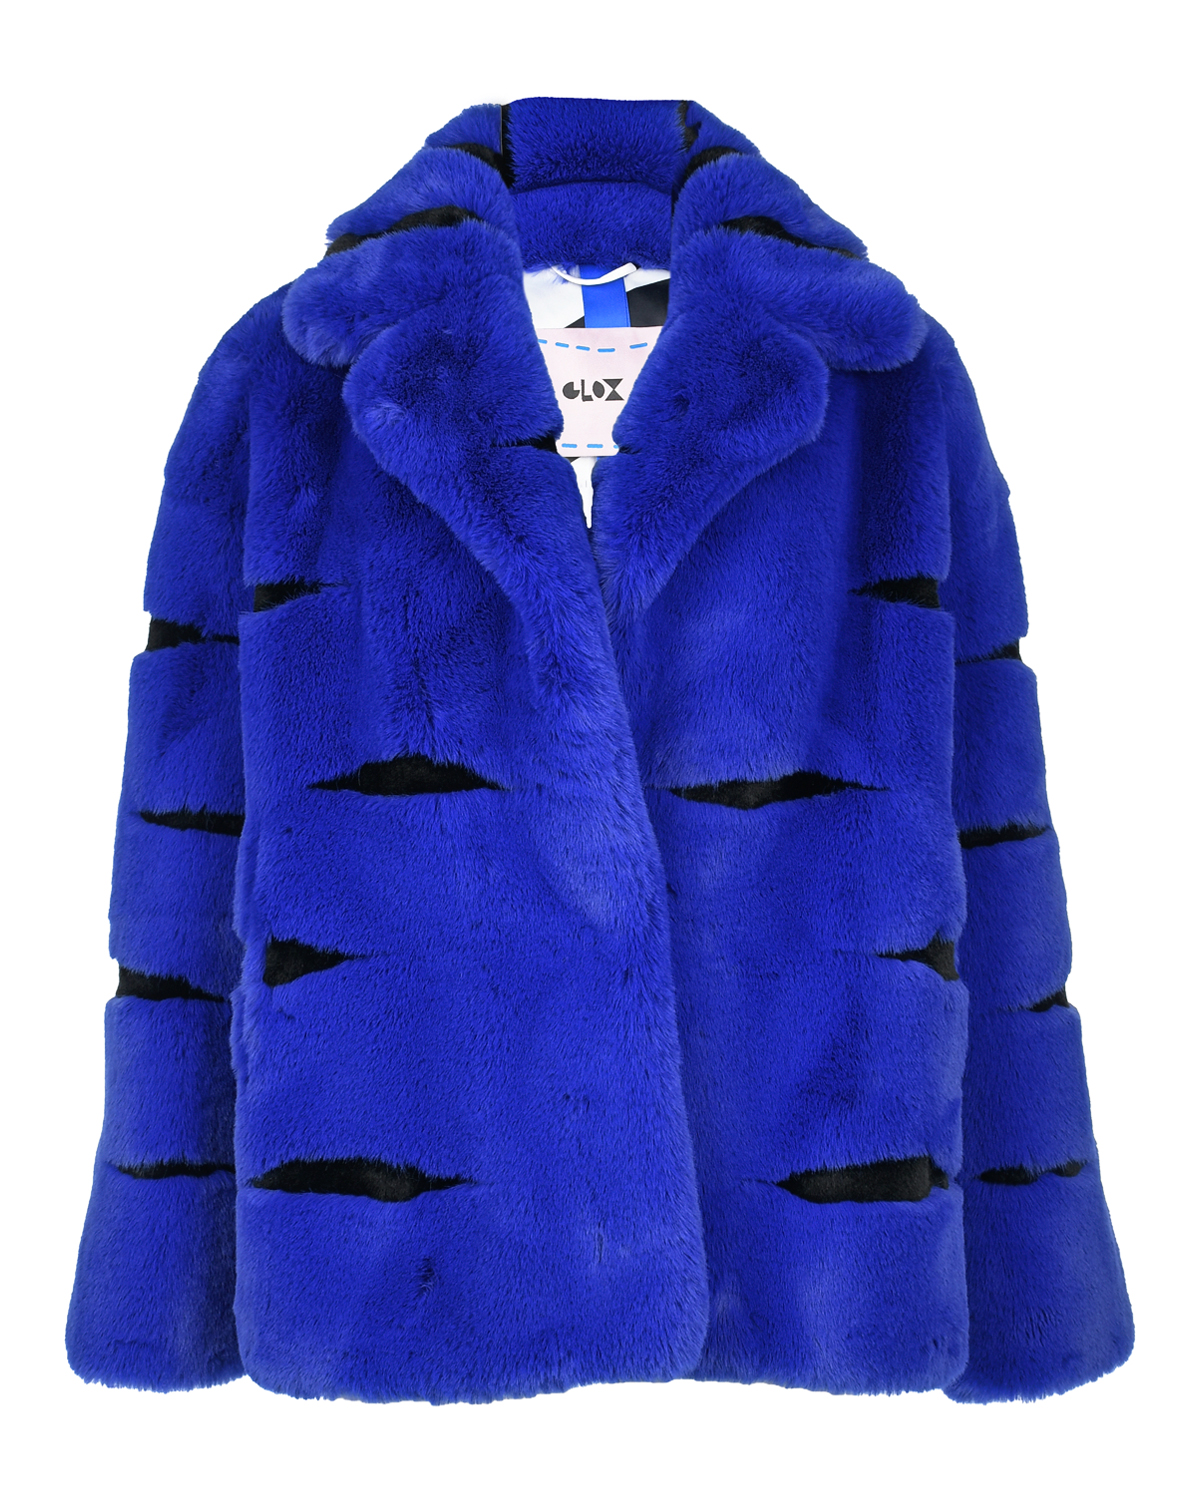 Синяя куртка из эко-меха Glox, размер 40, цвет синий